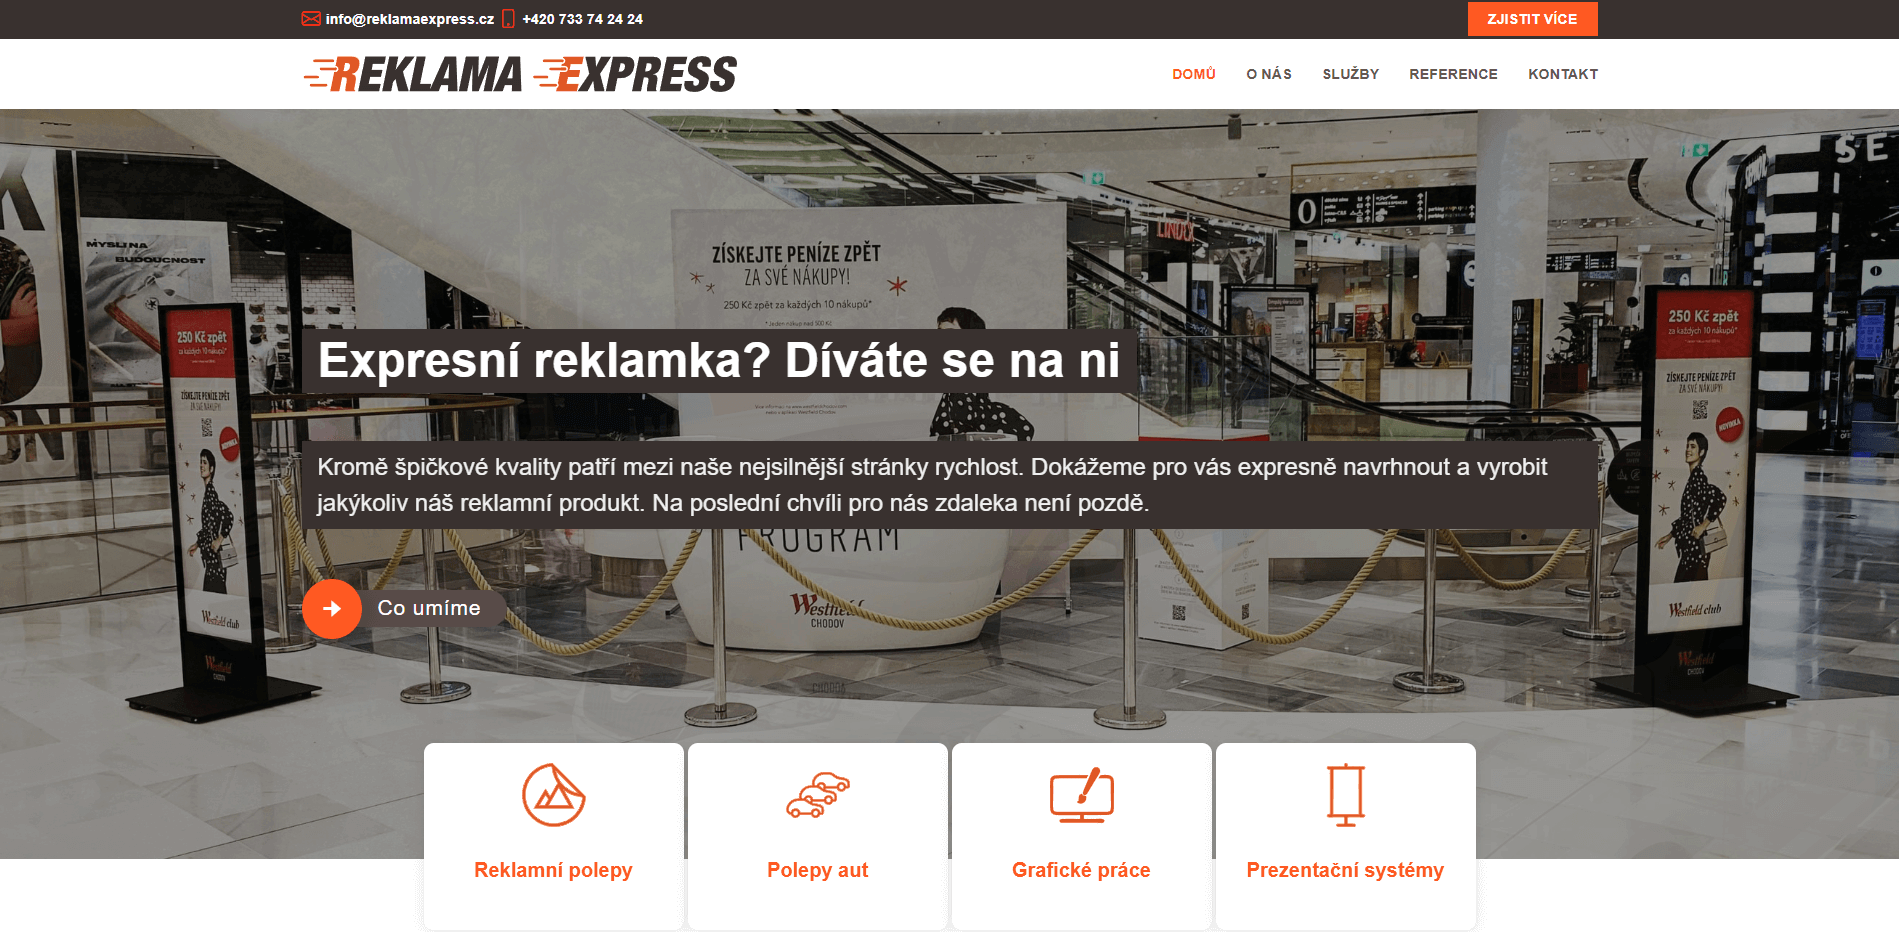 Reklama Express Desktop